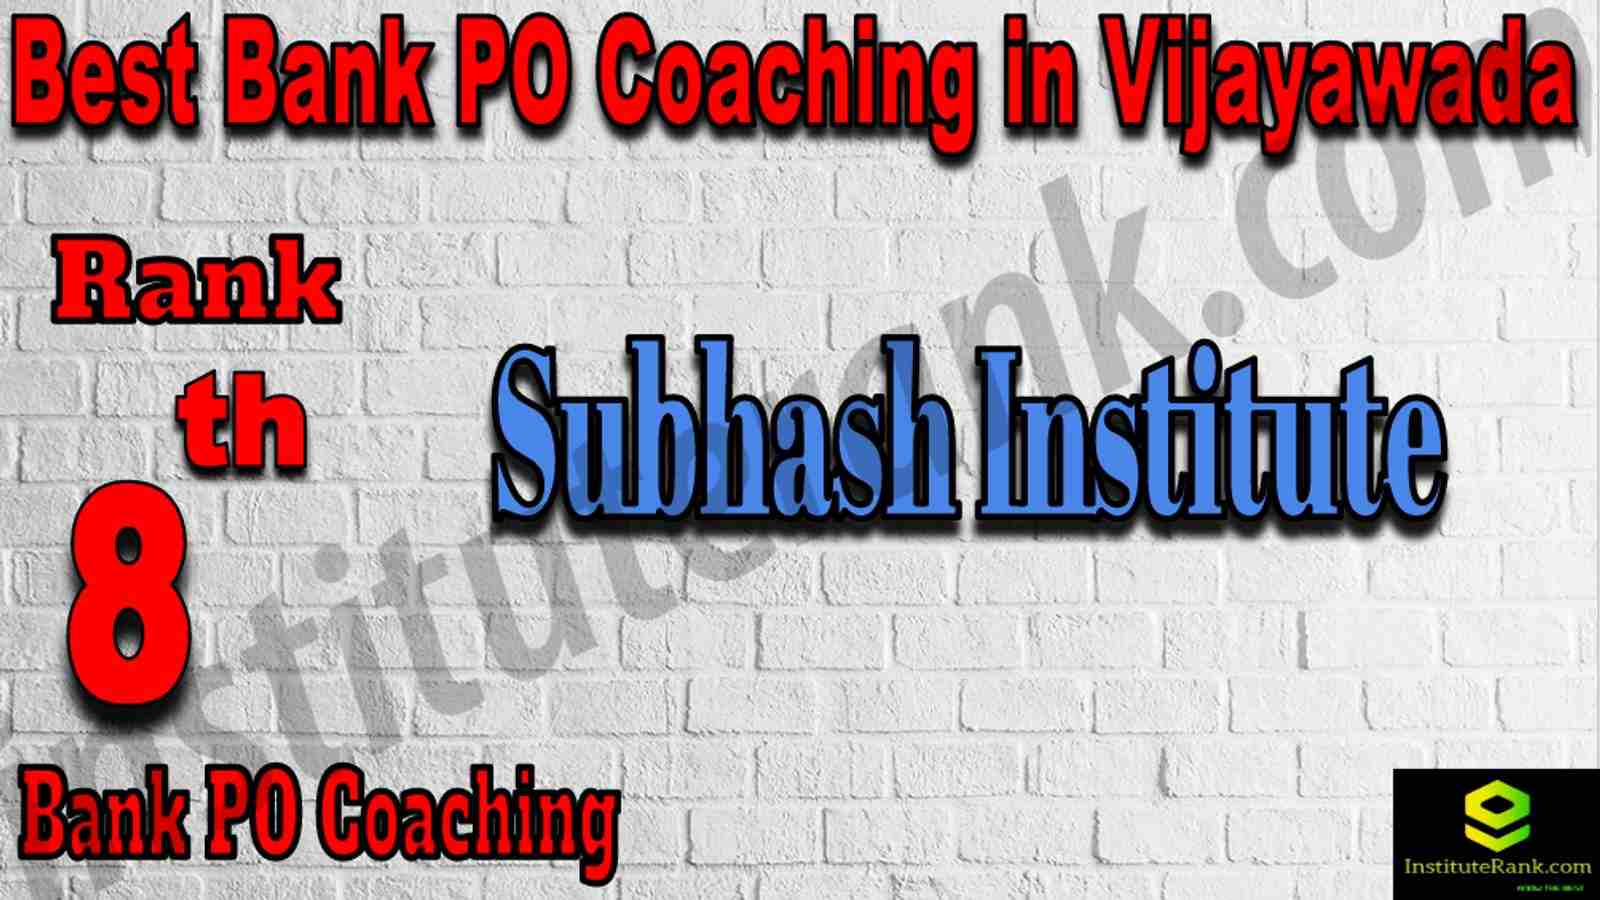 8th Best Bank PO Coaching in Vijayawada